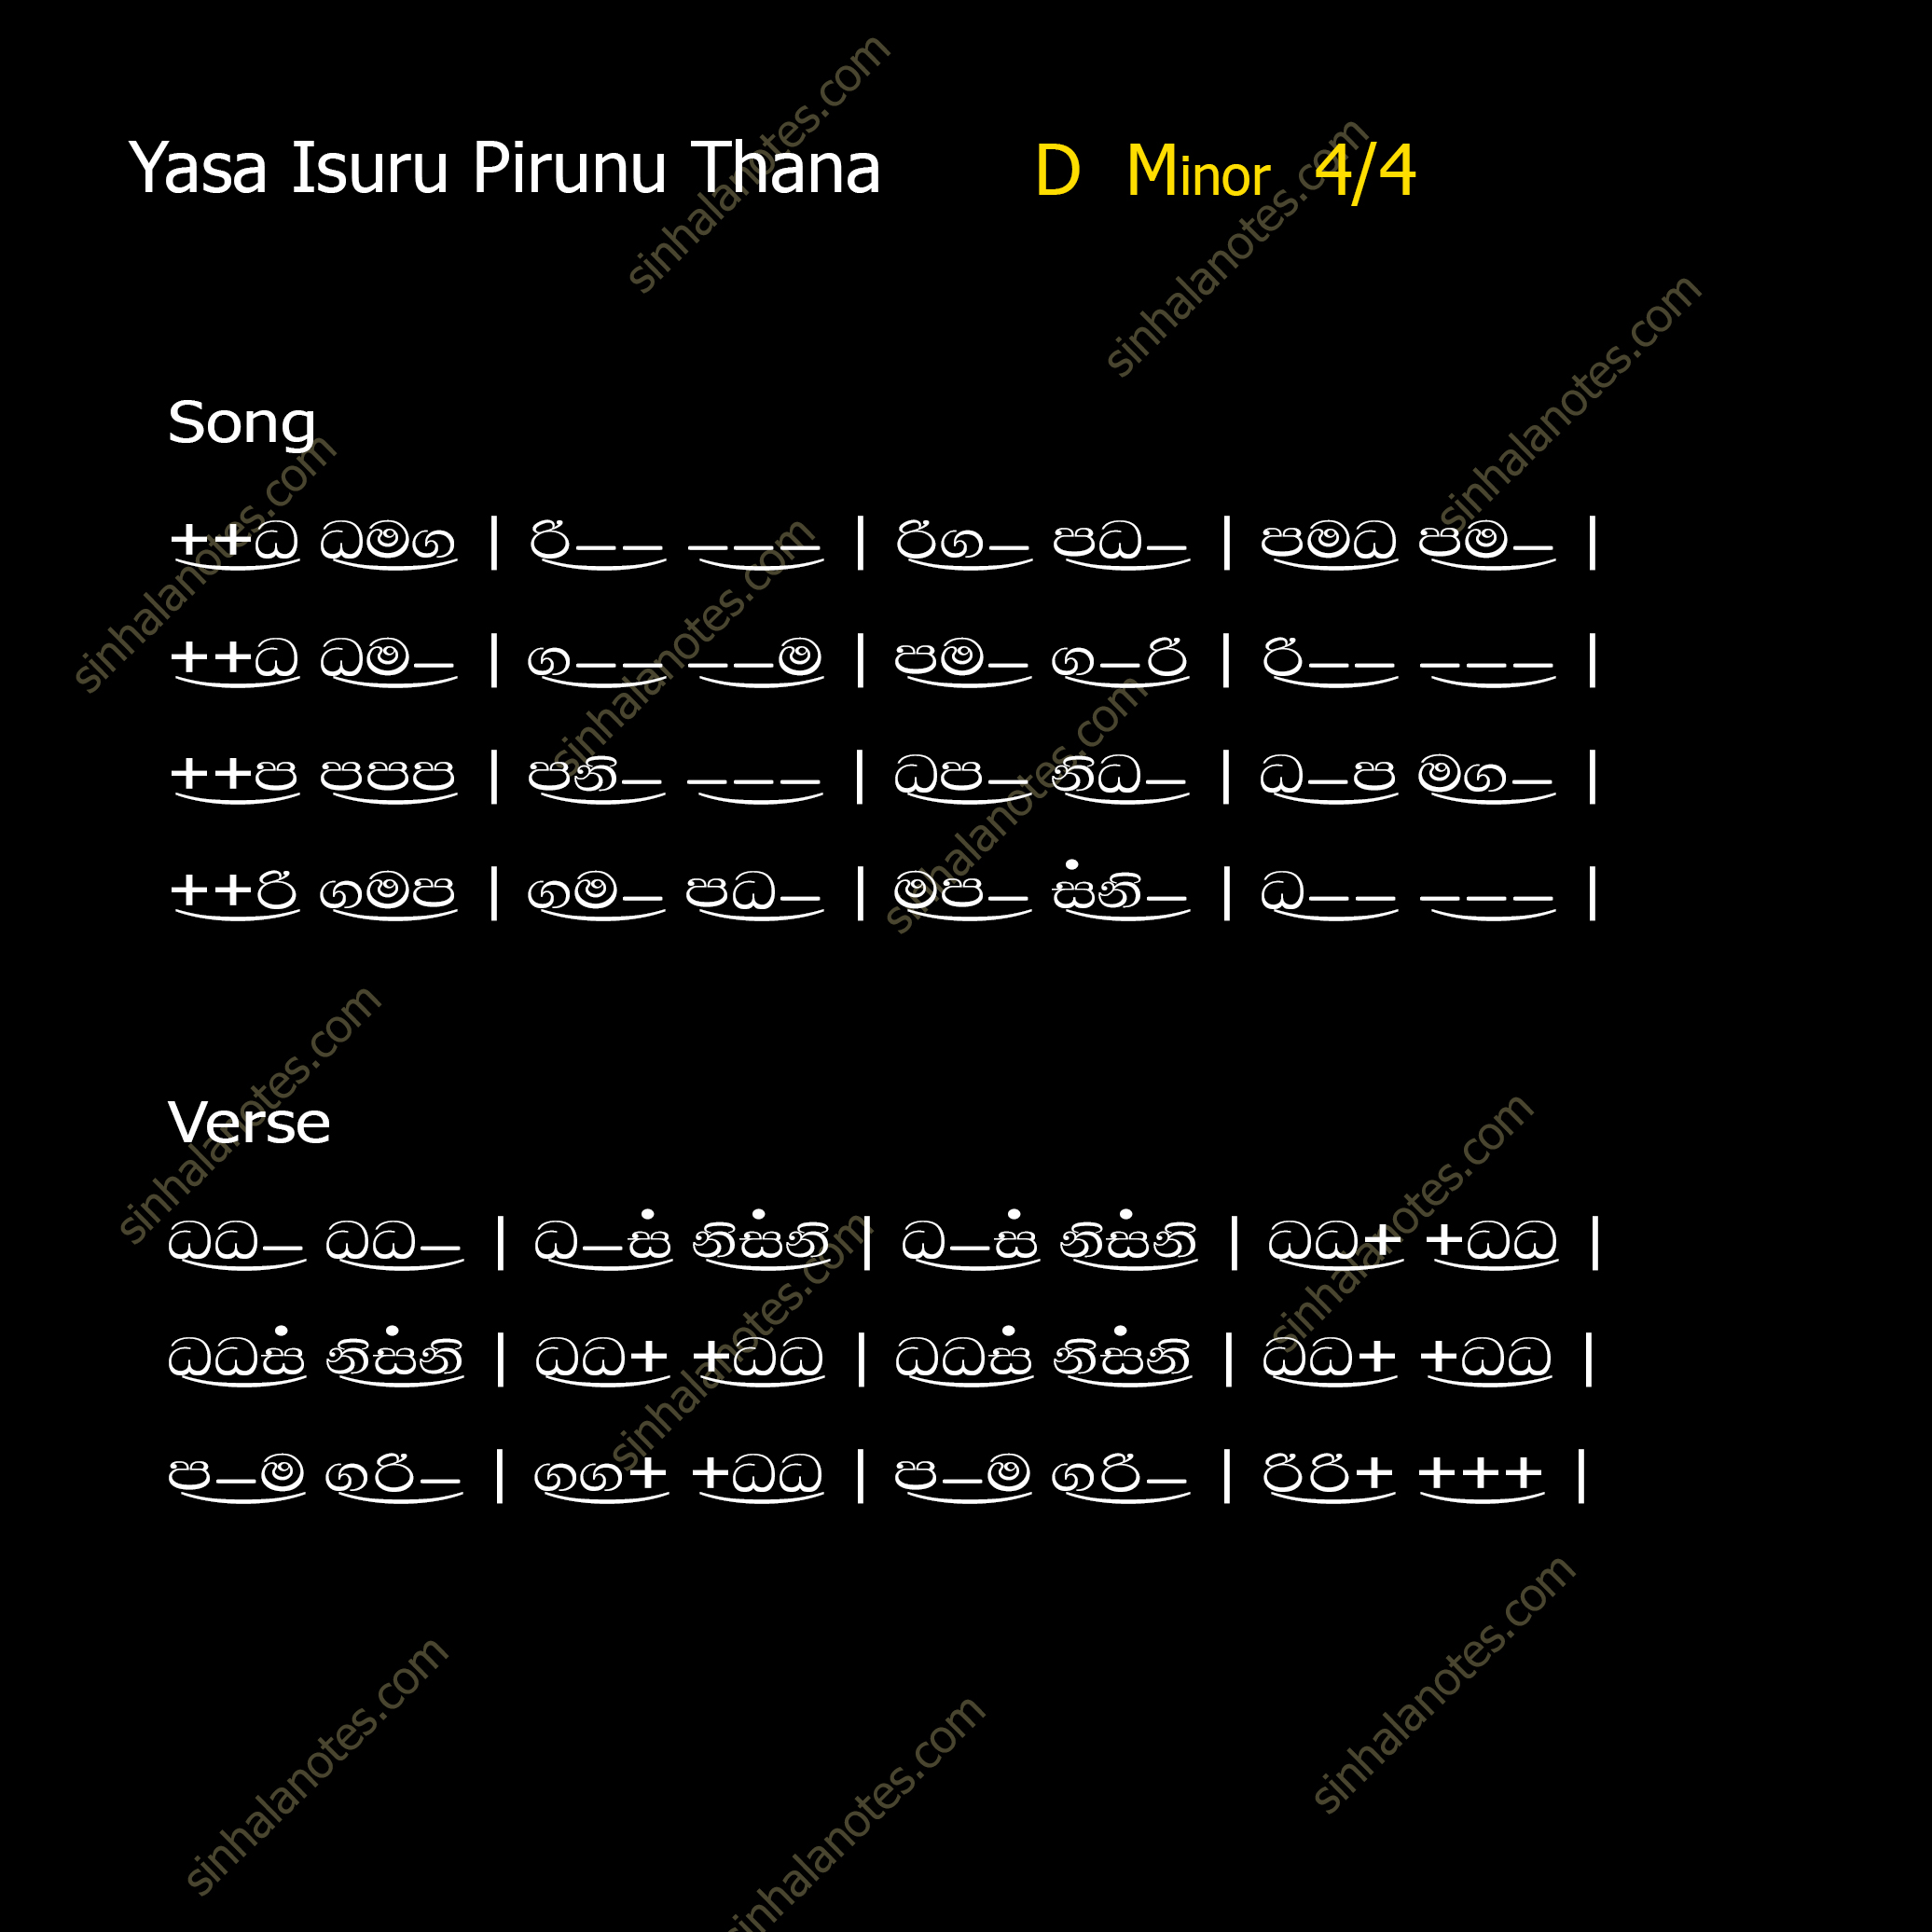 Yasa Isuru Pirunu Thana